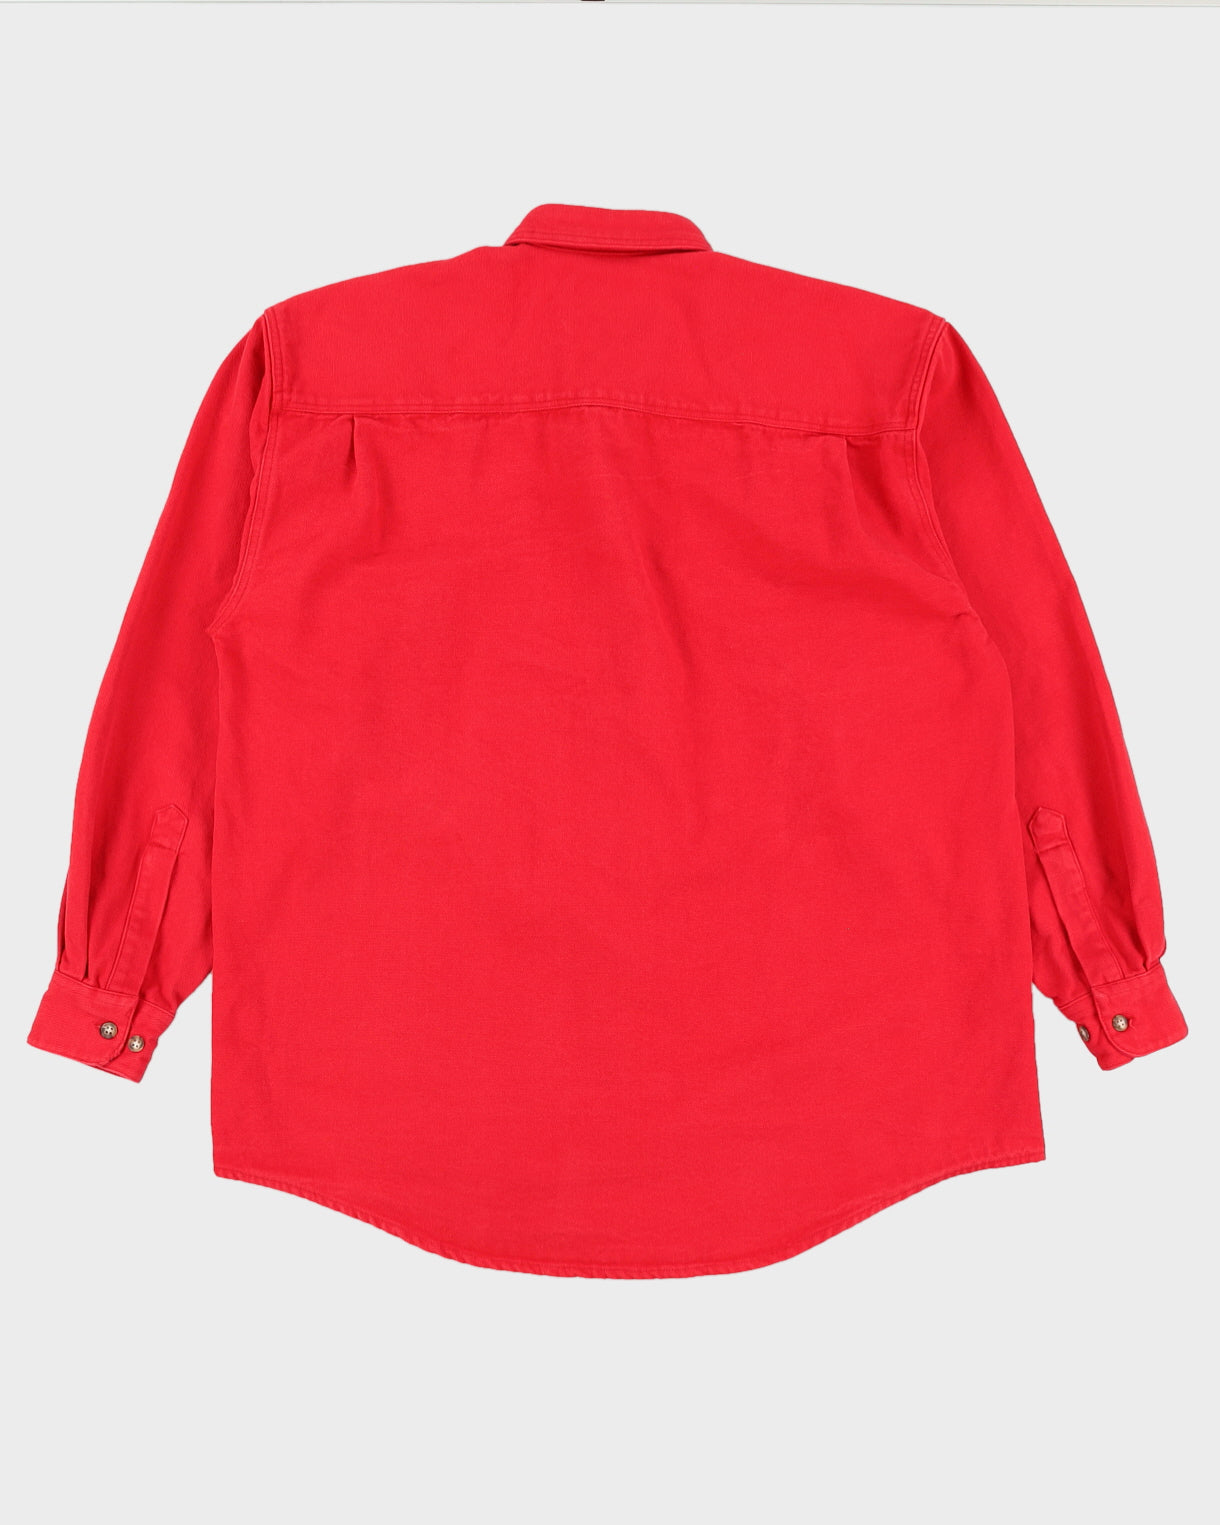 Vintage 90s Muskoka Pinky Red Shirt - M